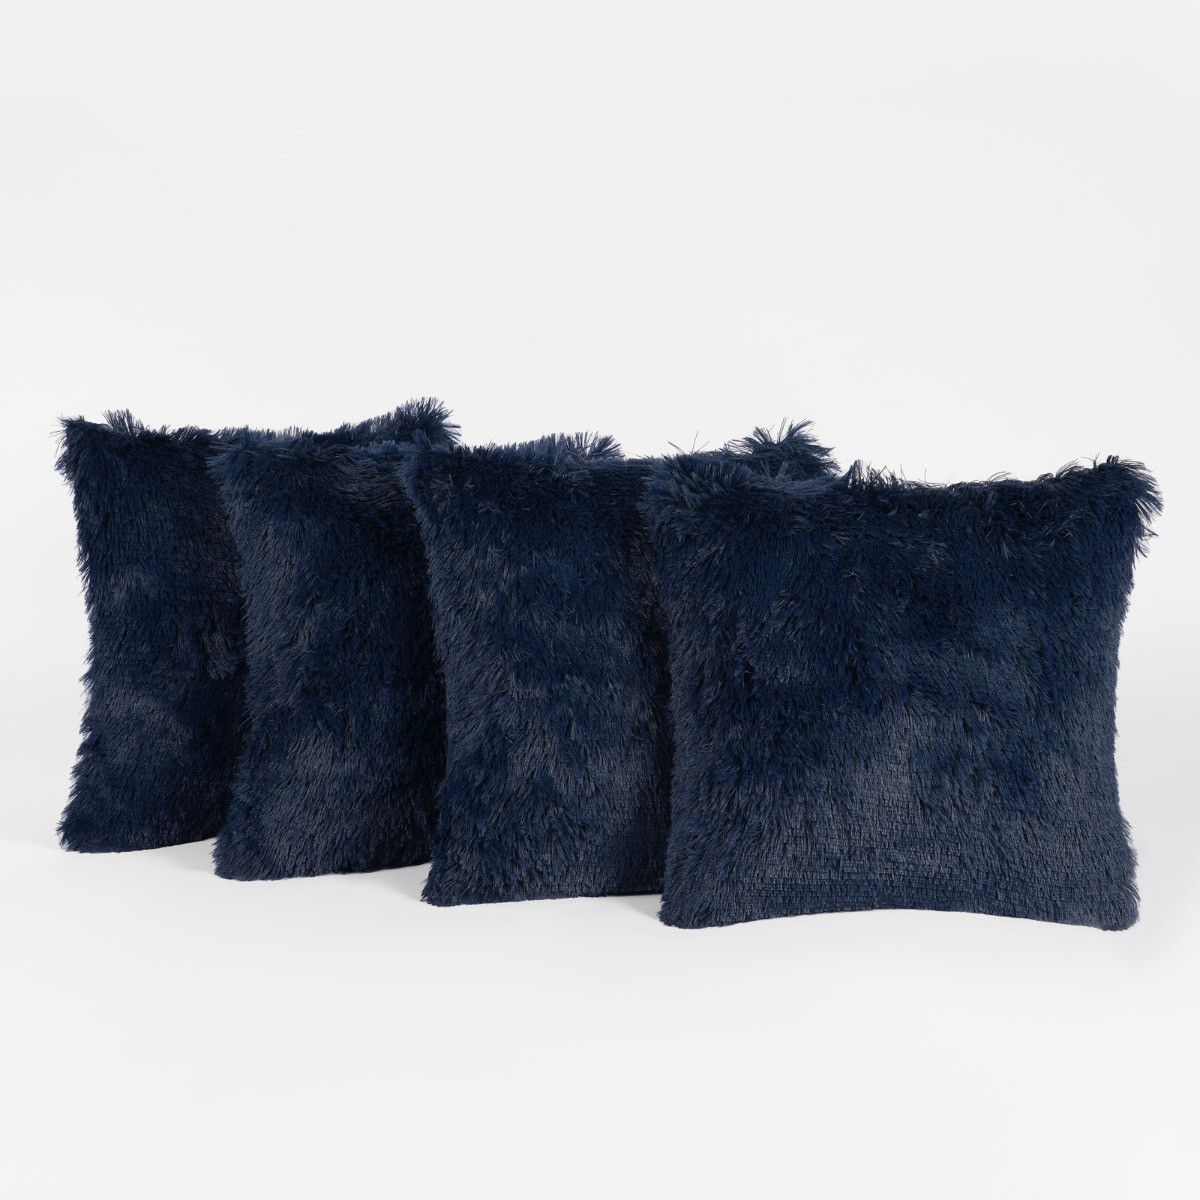 Sienna Fluffy Cushion Covers - Navy>